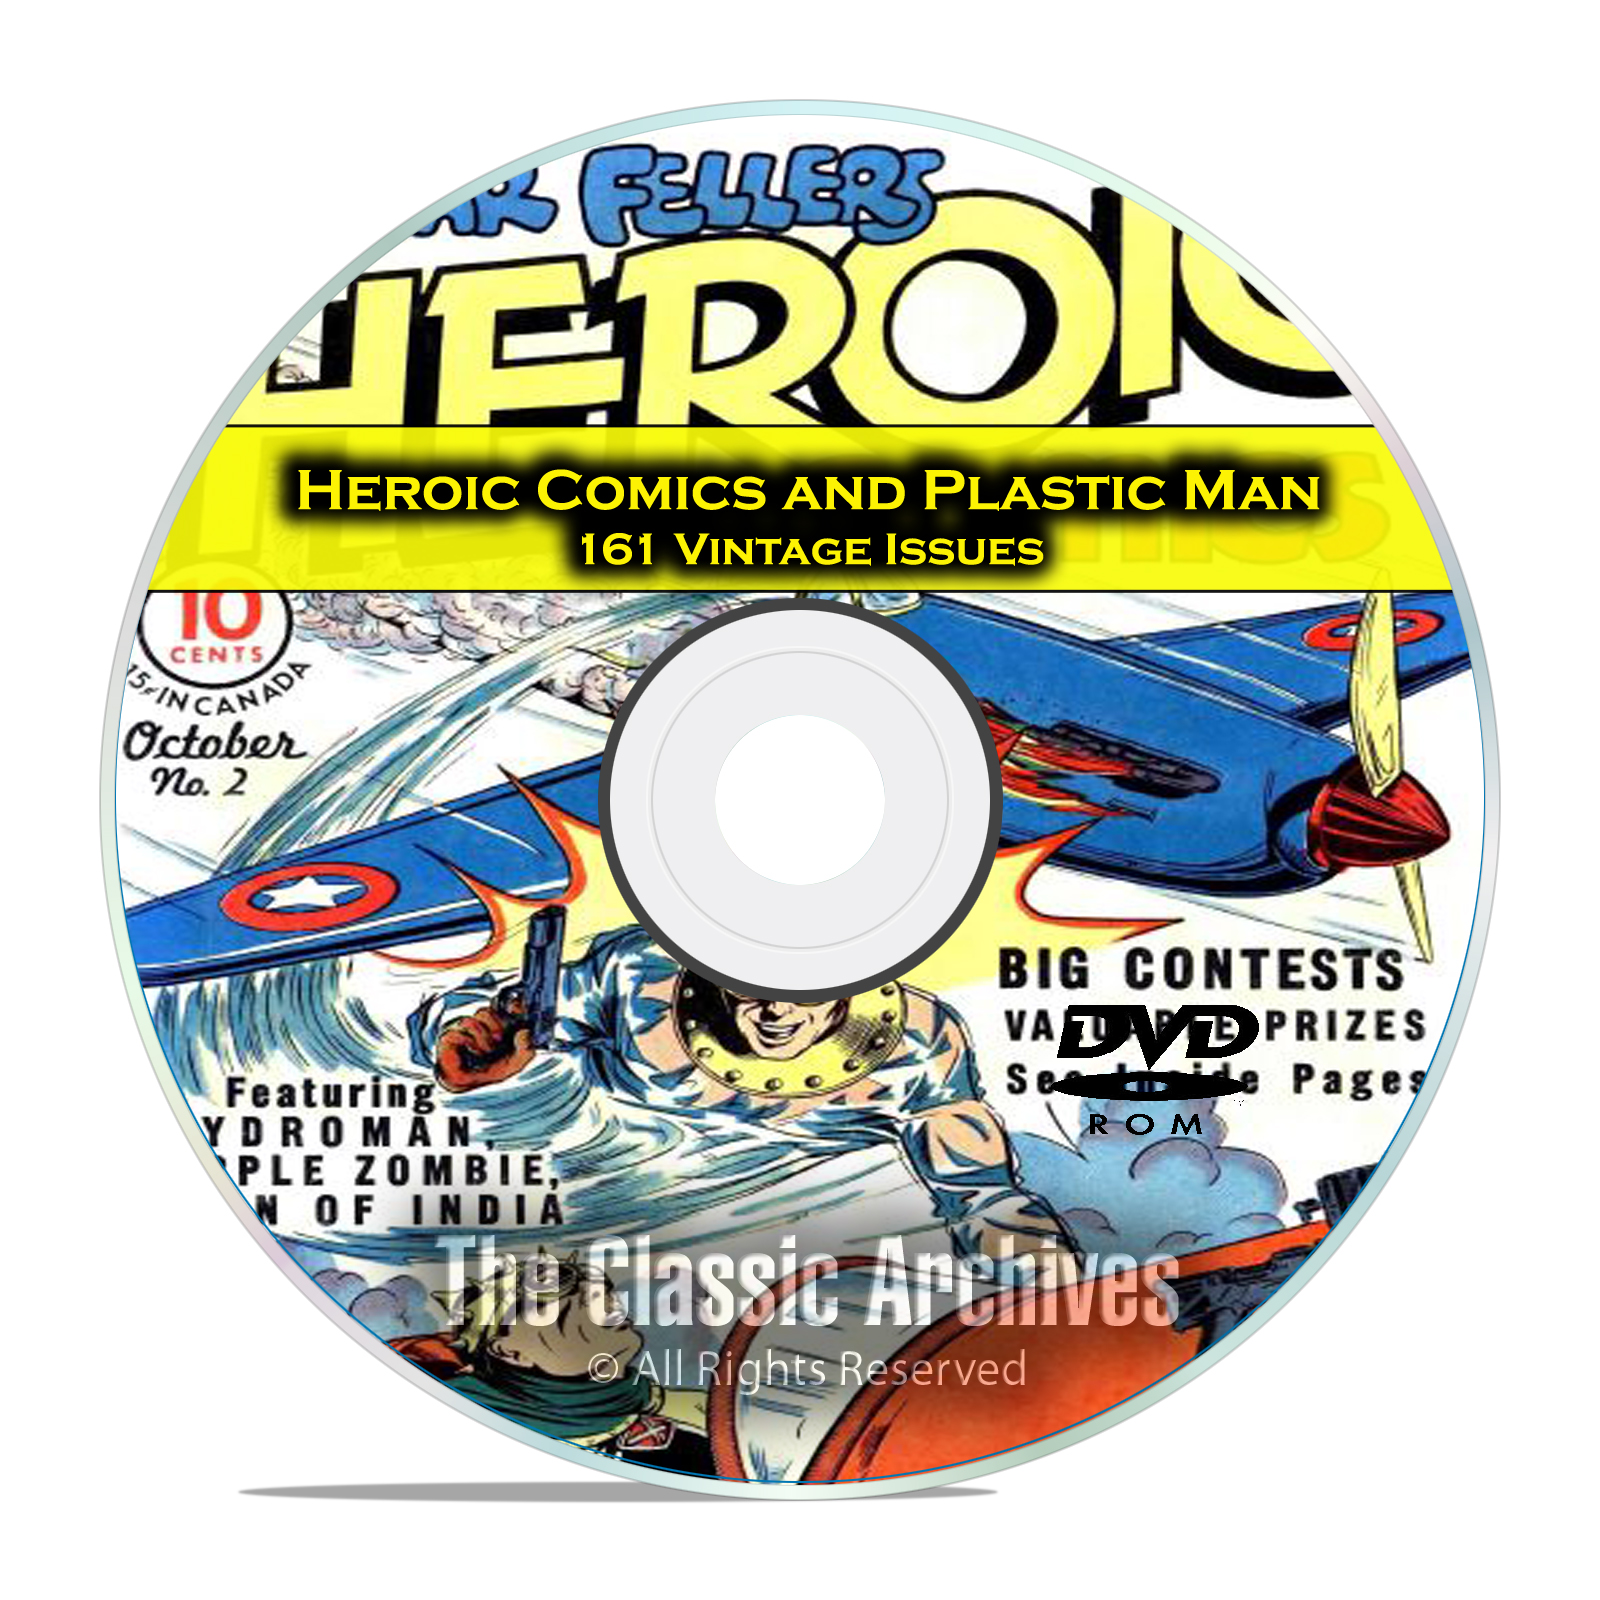 Heroic Comics and Plastic Man 161 Vintage Issues, Golden Age Comics PDF DVD